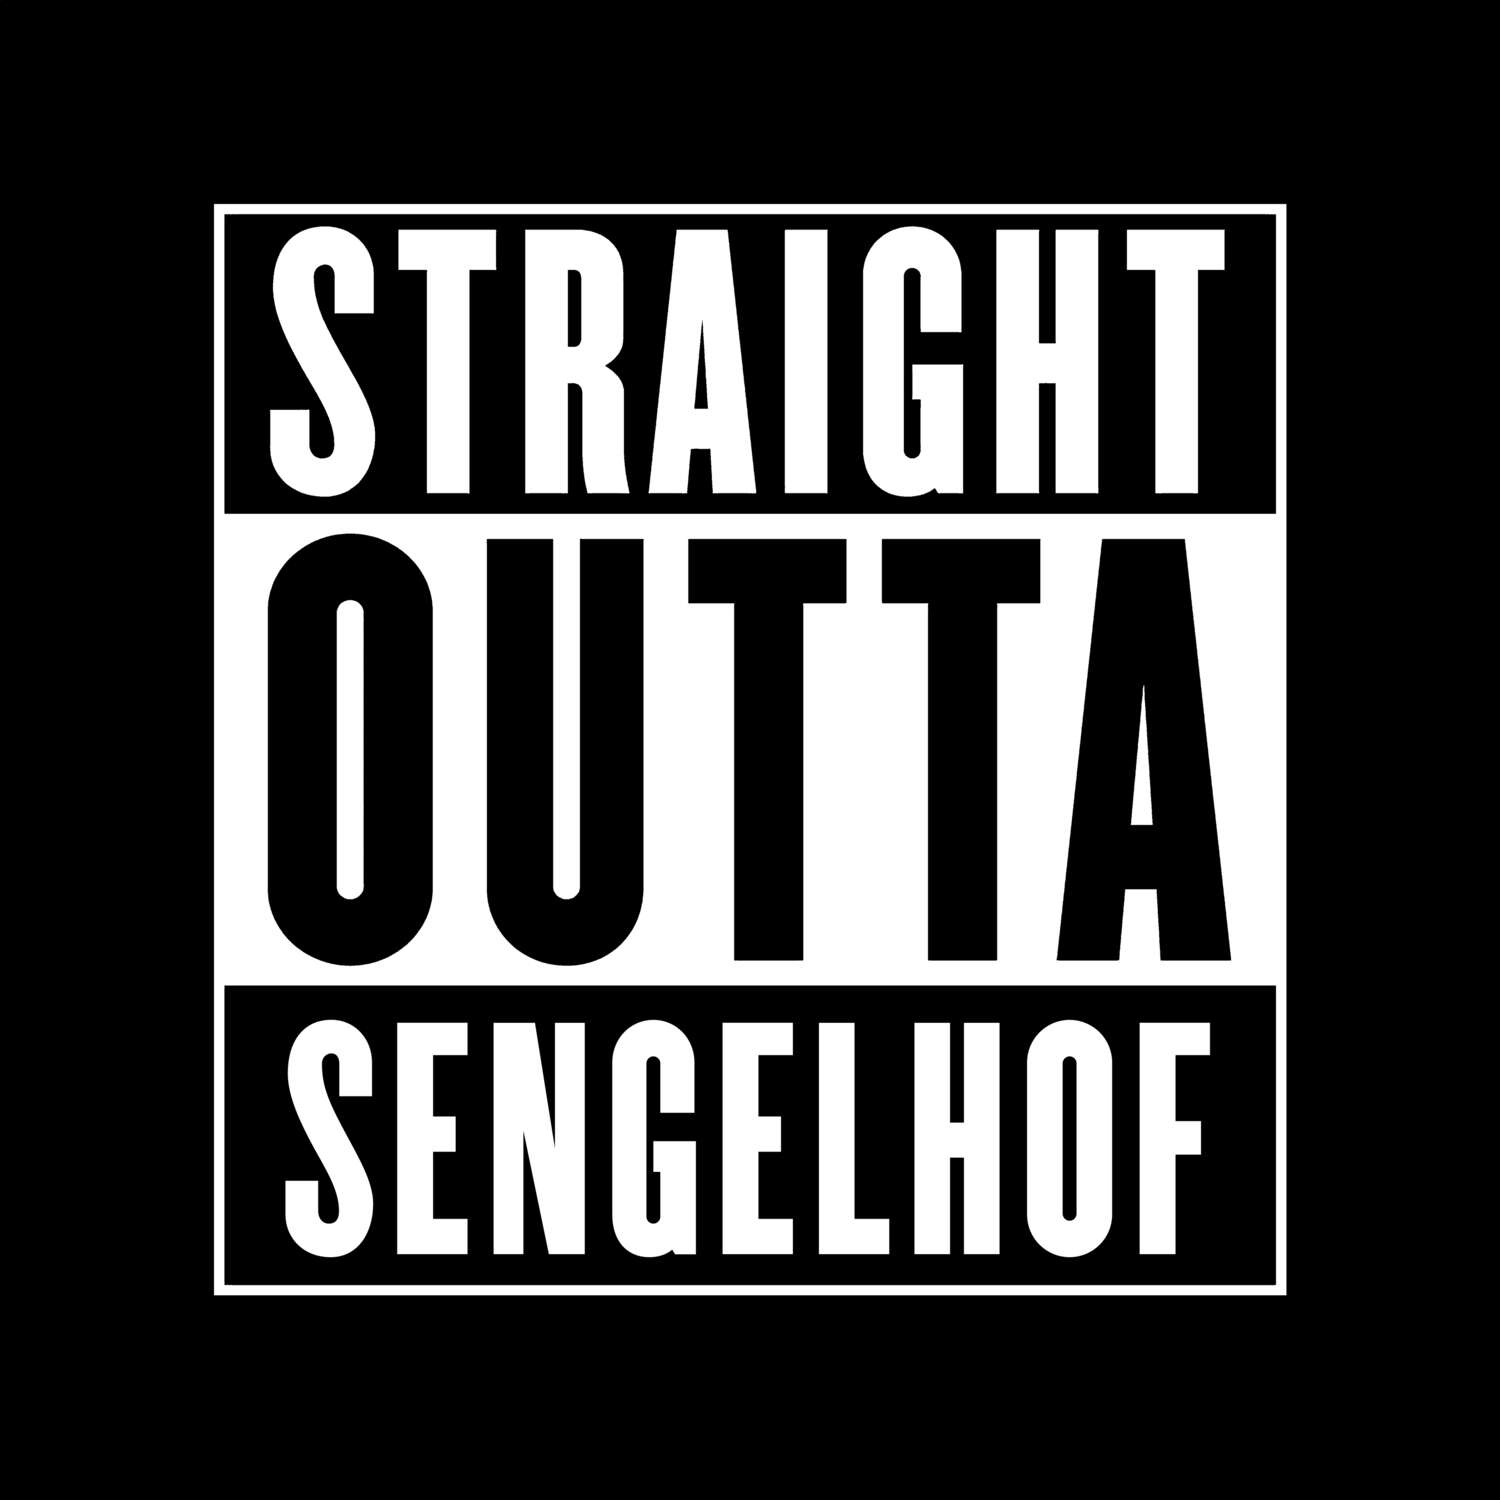 Sengelhof T-Shirt »Straight Outta«